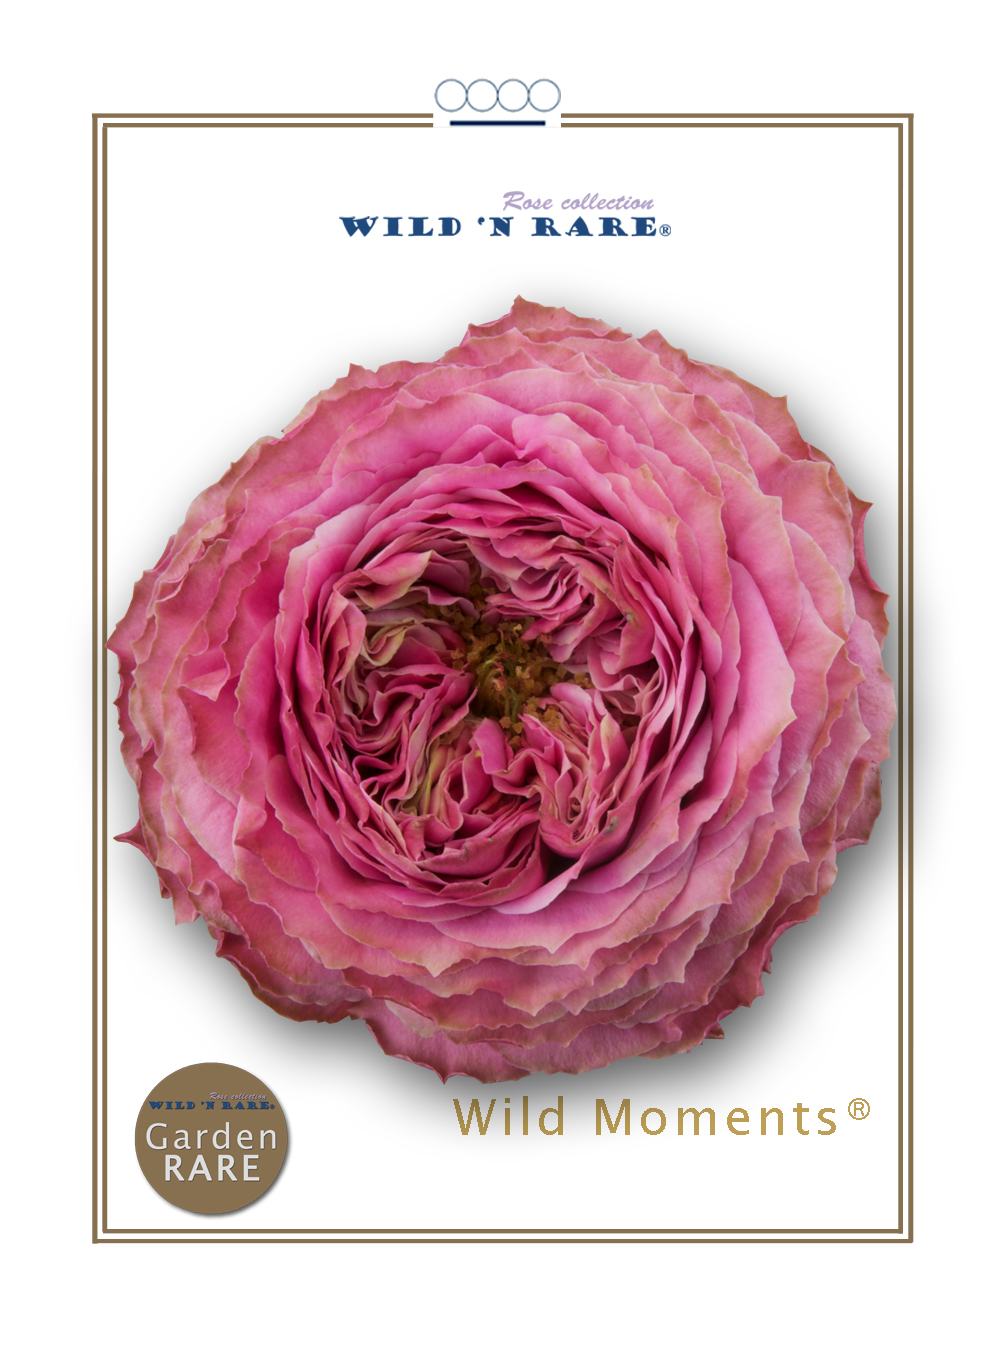 one wild moment (